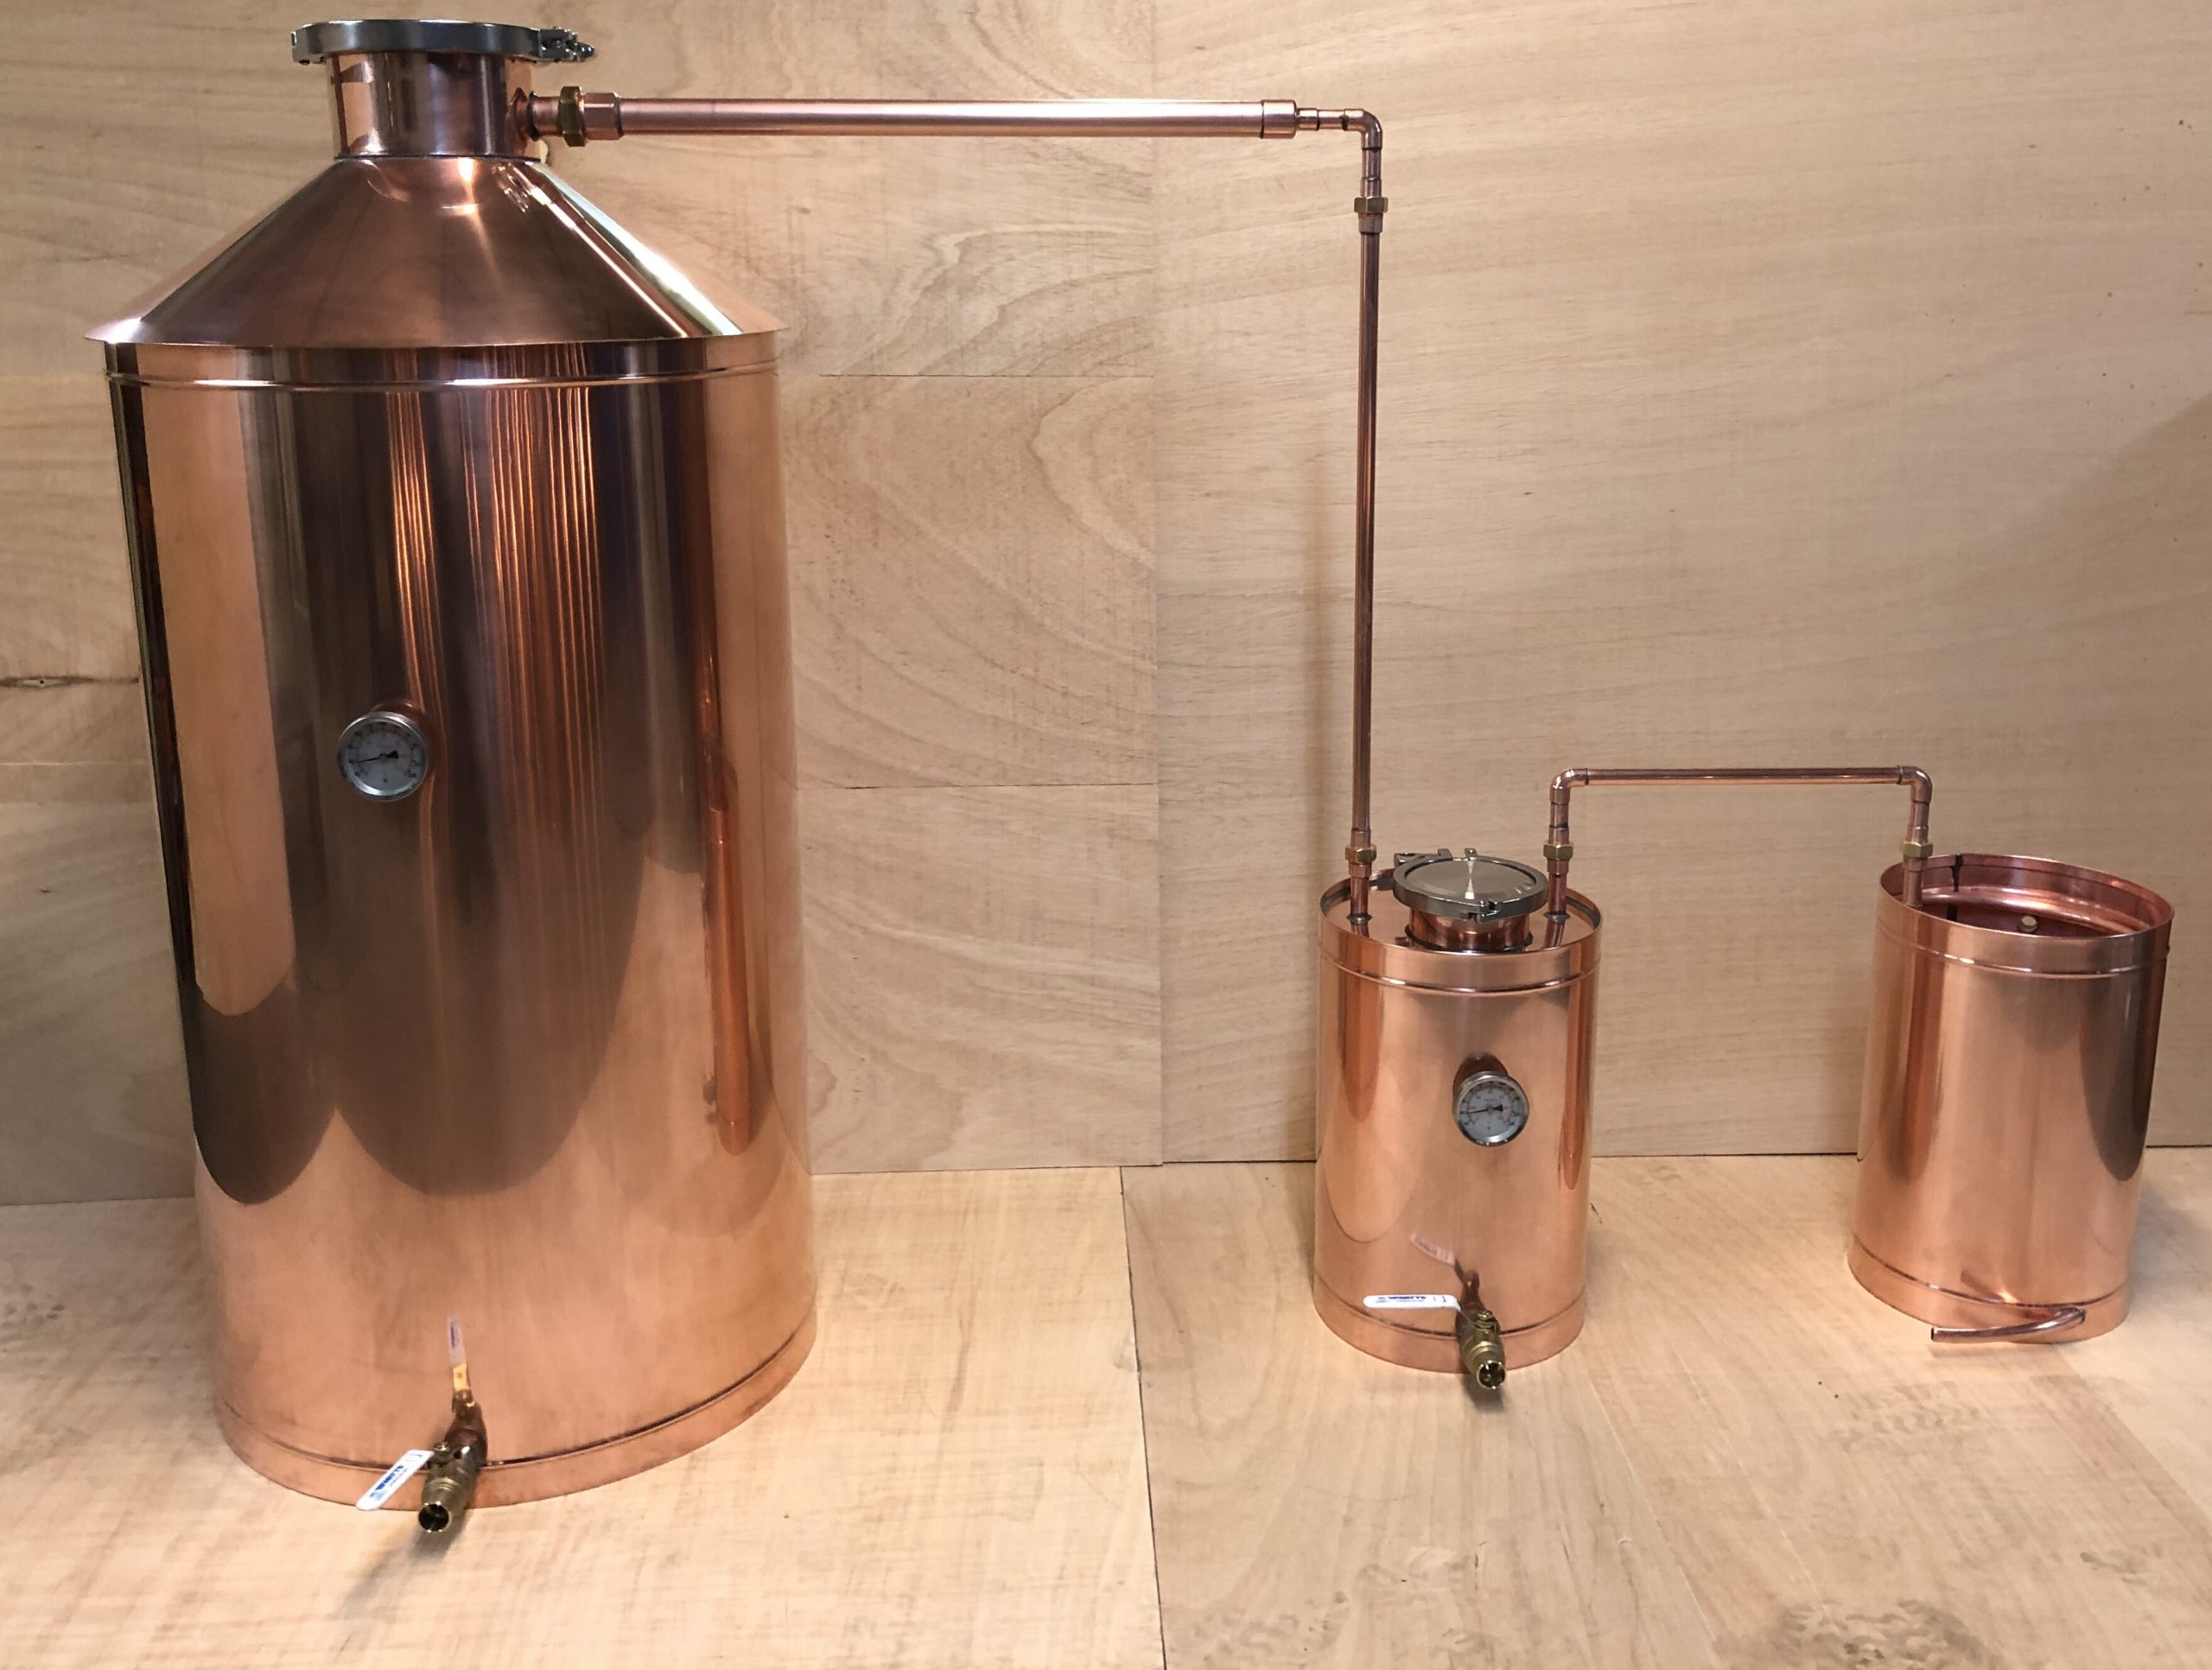 Copper Moonshine Stills - buy Complete Alcohol Distiller kit or equipment  for home distillation – Copper Pro